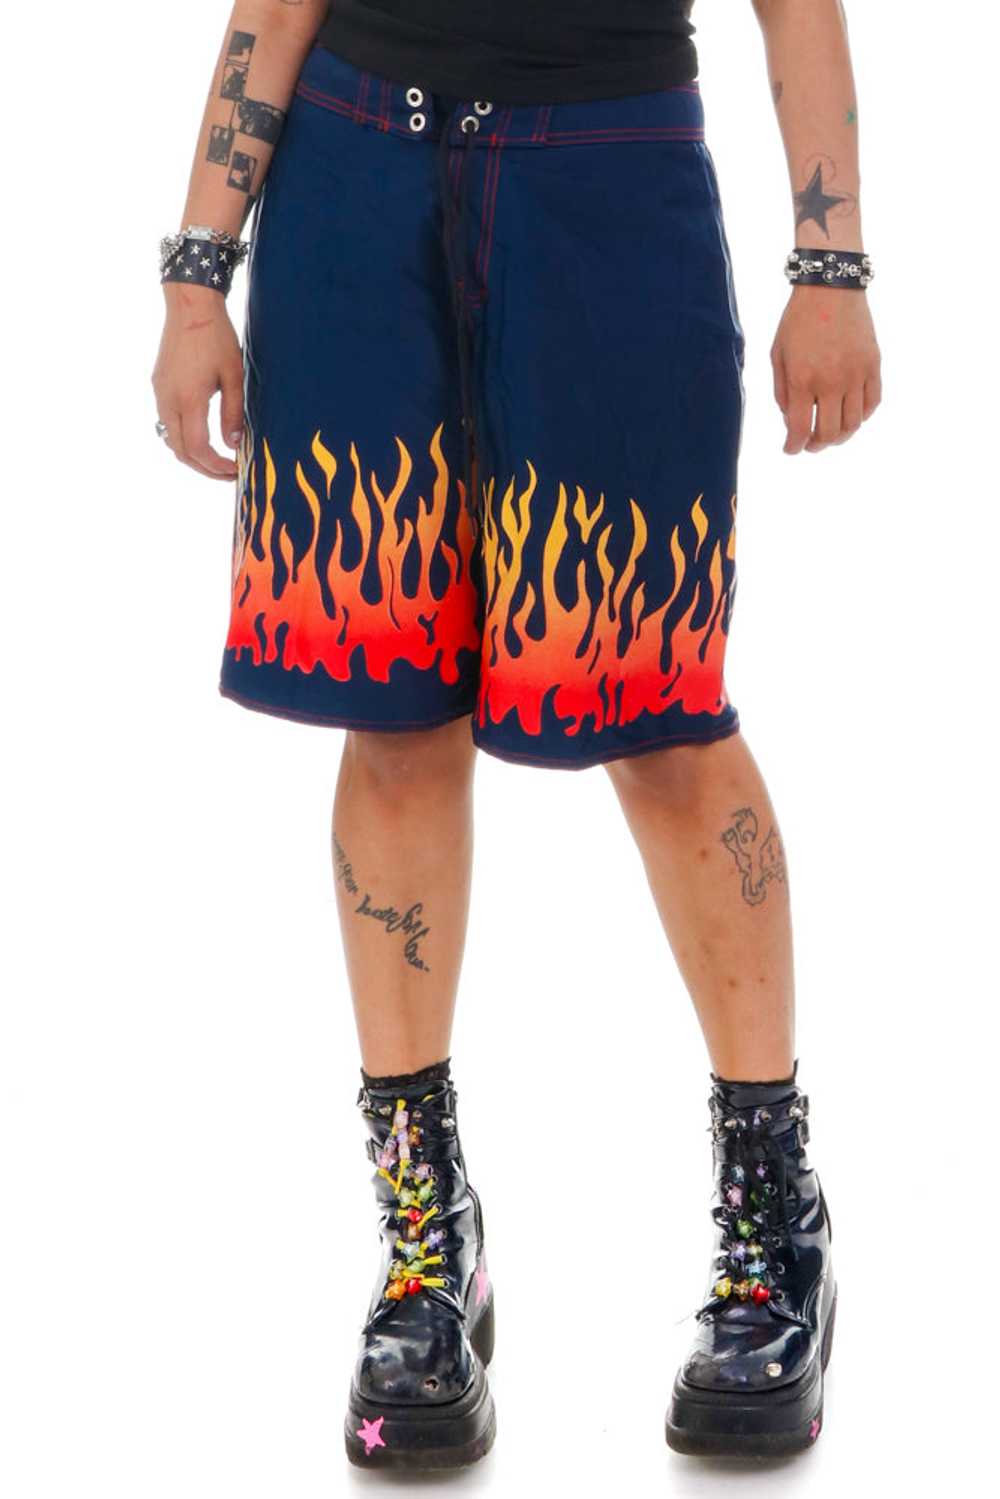 Vintage Y2K Flaming Hot Shorts - L/XL - image 1